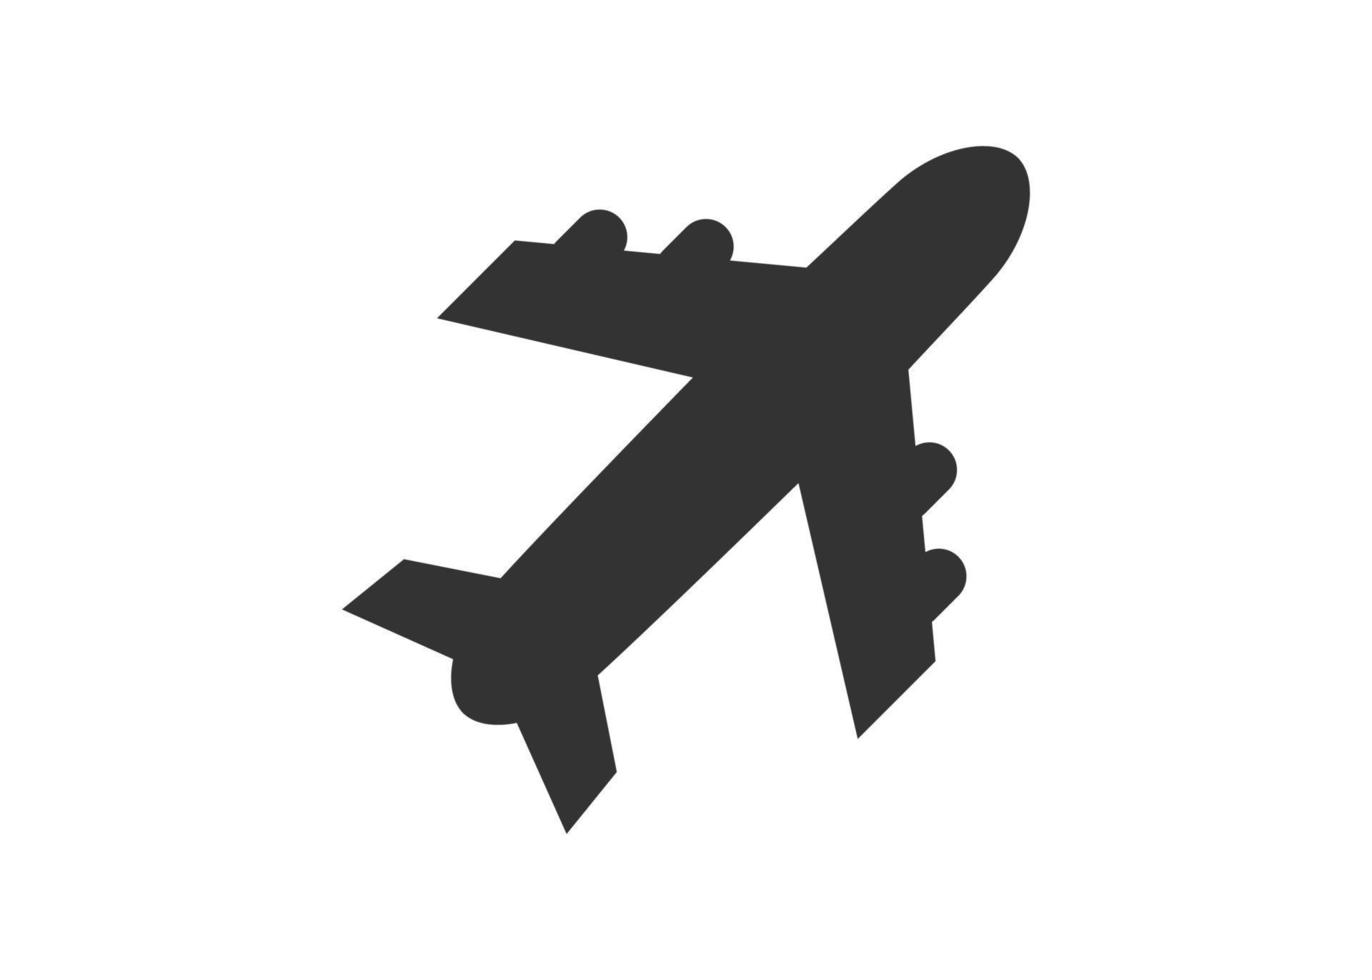 Flugzeug Logo Symbol Design Vorlage isoliert vektor